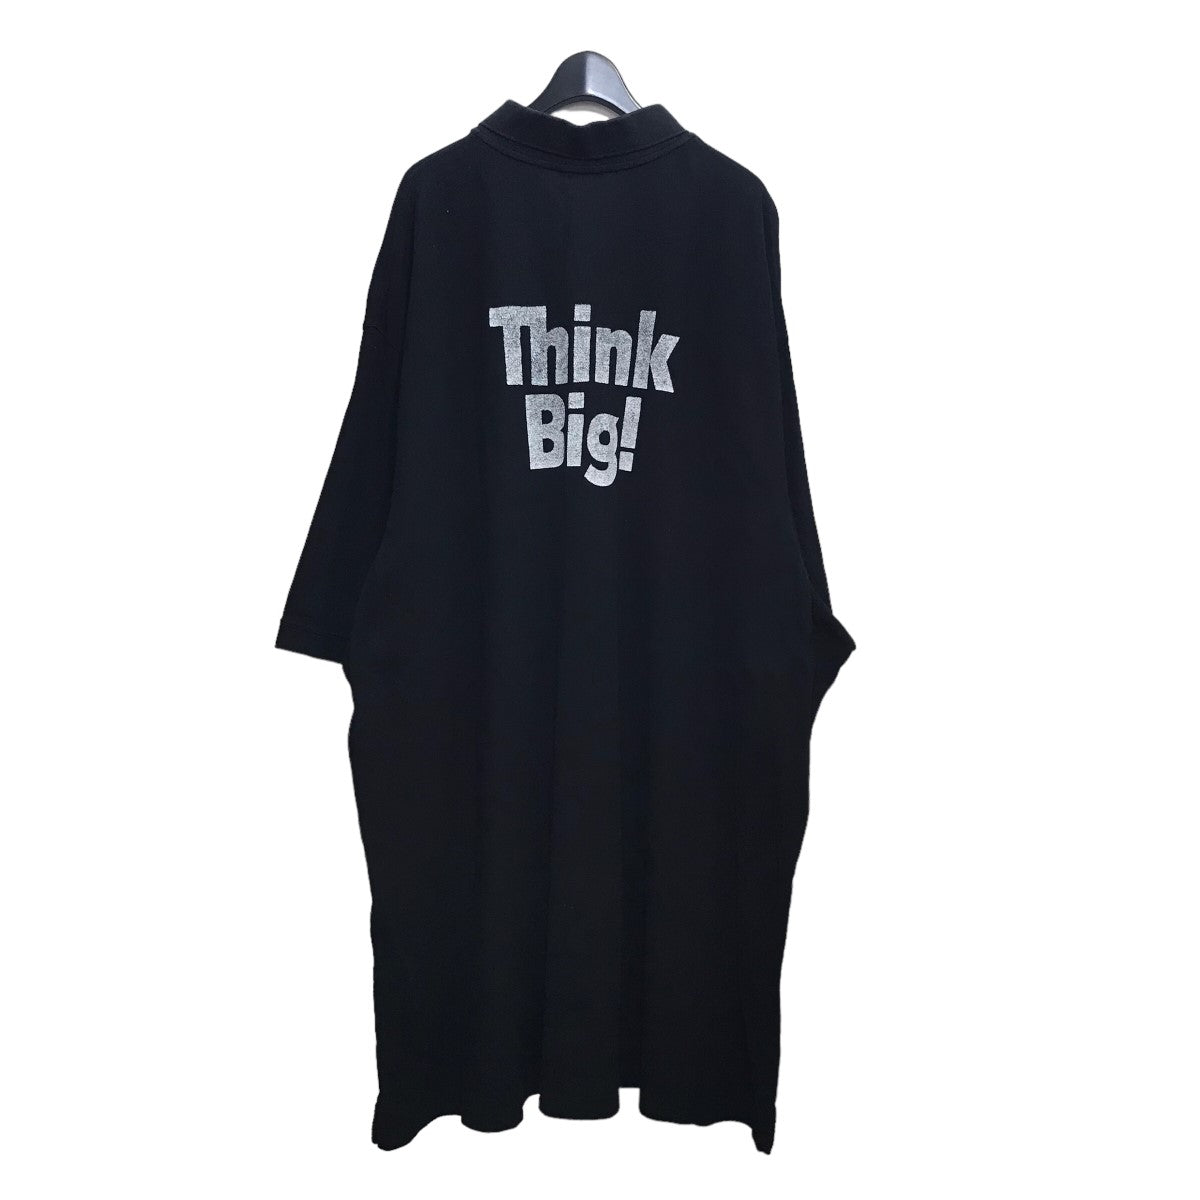 BALENCIAGA(バレンシアガ) Think Bigオーバーサイズポロシャツ 507389 